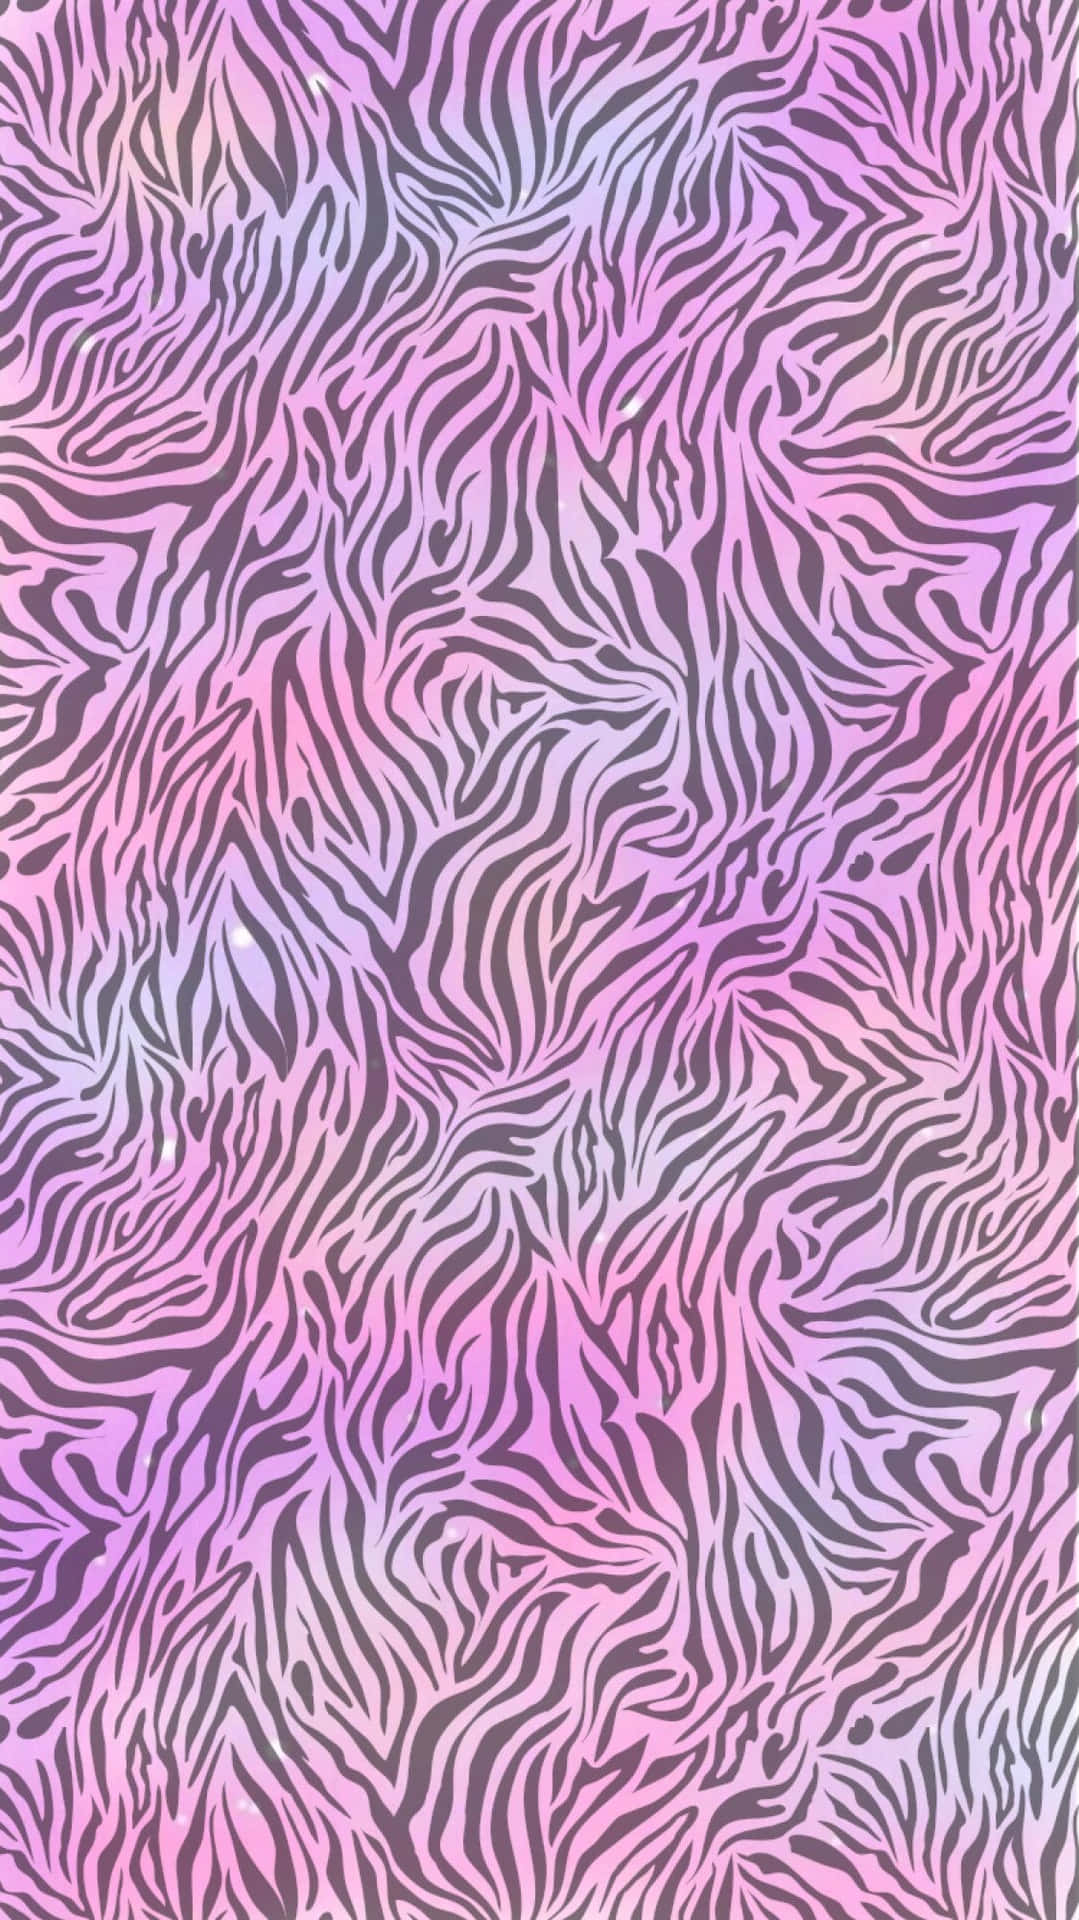 Animal Print Zebra Pink Wallpaper